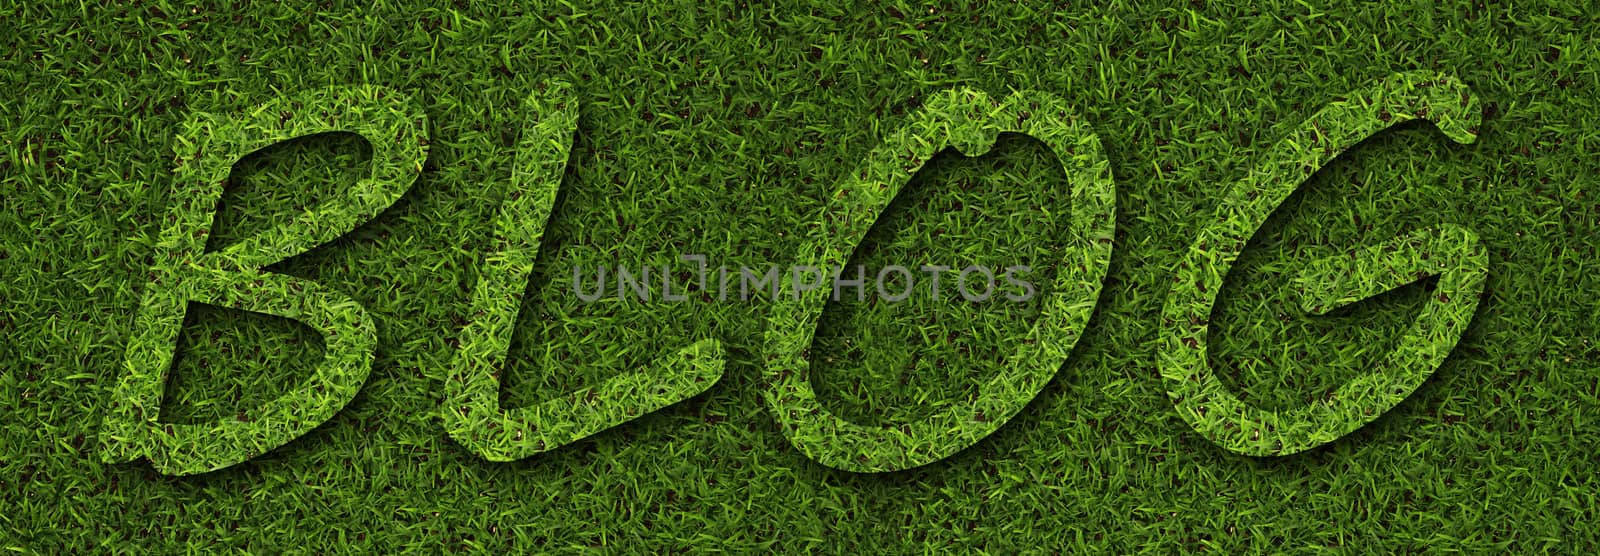 blog made from grass